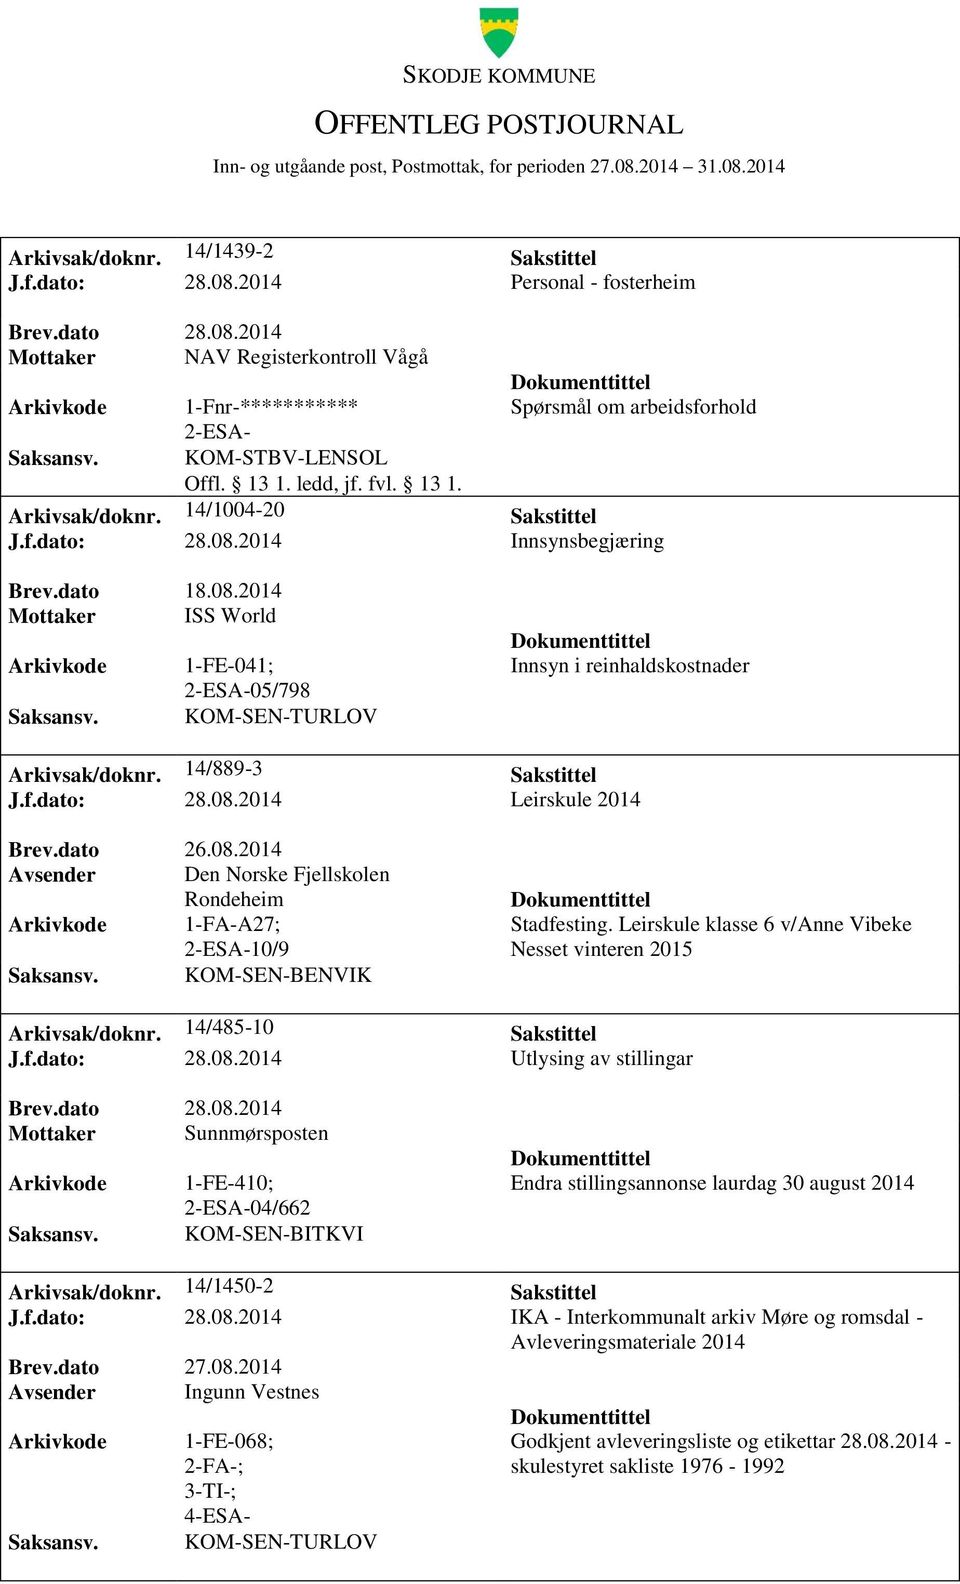 Leirskule klasse 6 v/anne Vibeke Nesset vinteren 2015 Arkivsak/doknr. 14/485-10 Sakstittel J.f.dato: 28.08.